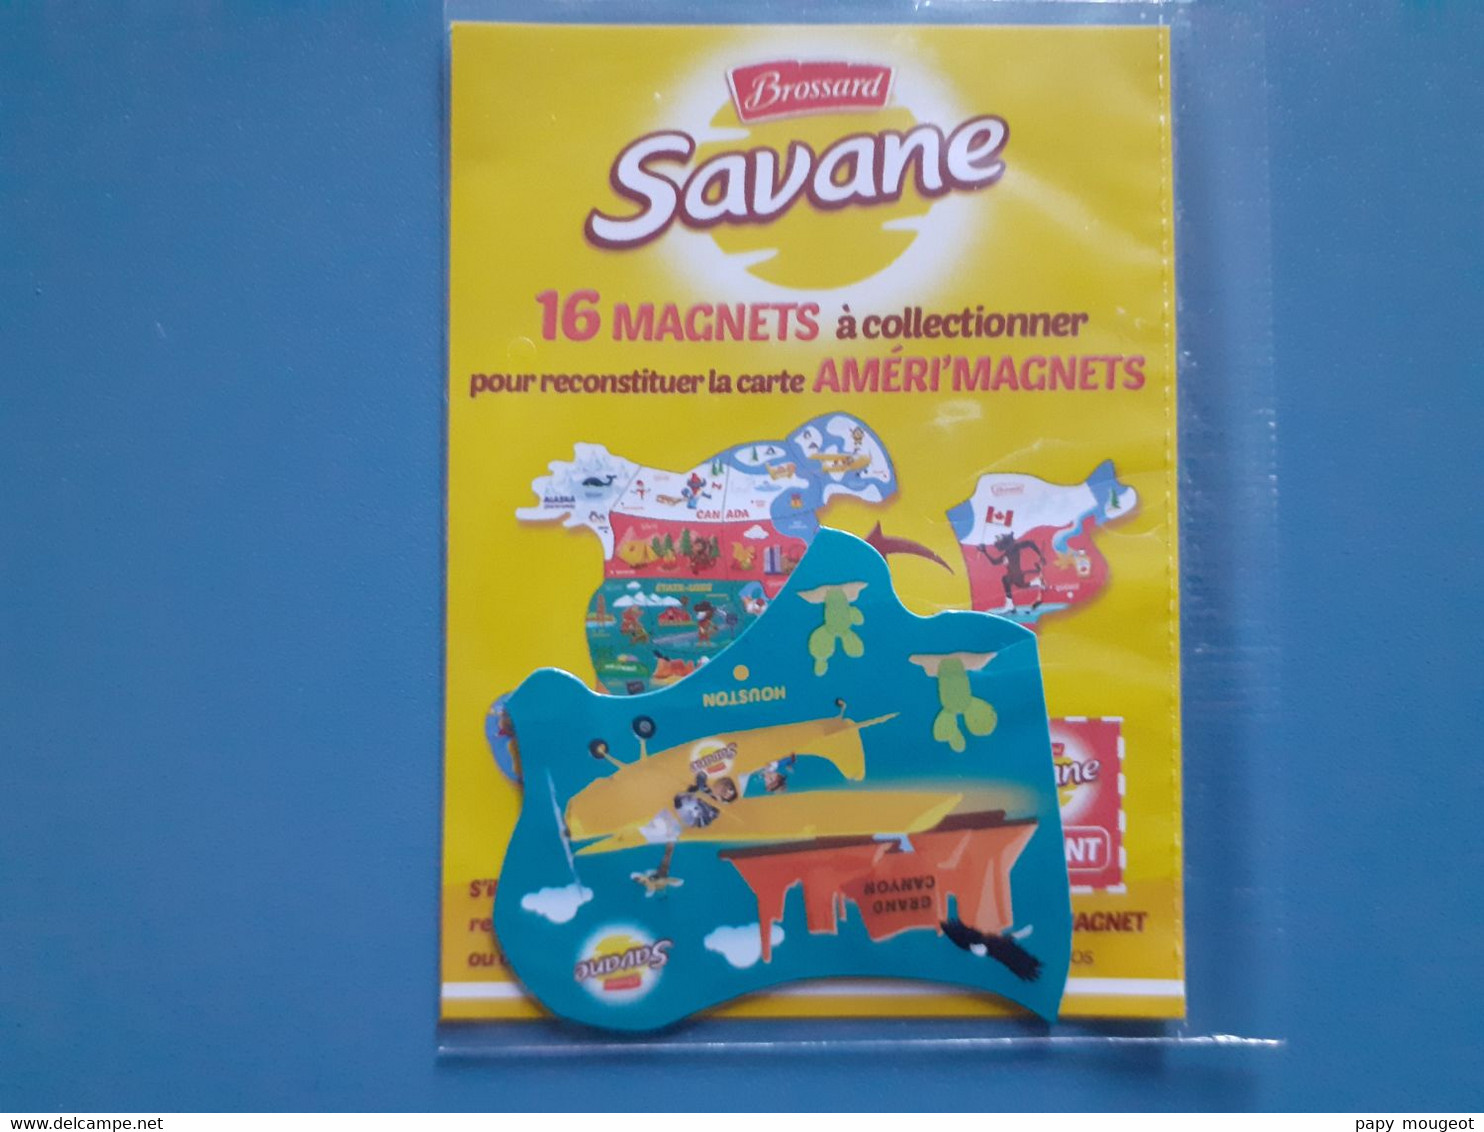 Brossard Savane - 16 Magnets Carte AMERI'MAGNETS - USA - Grand Canyon Houston - Reklame